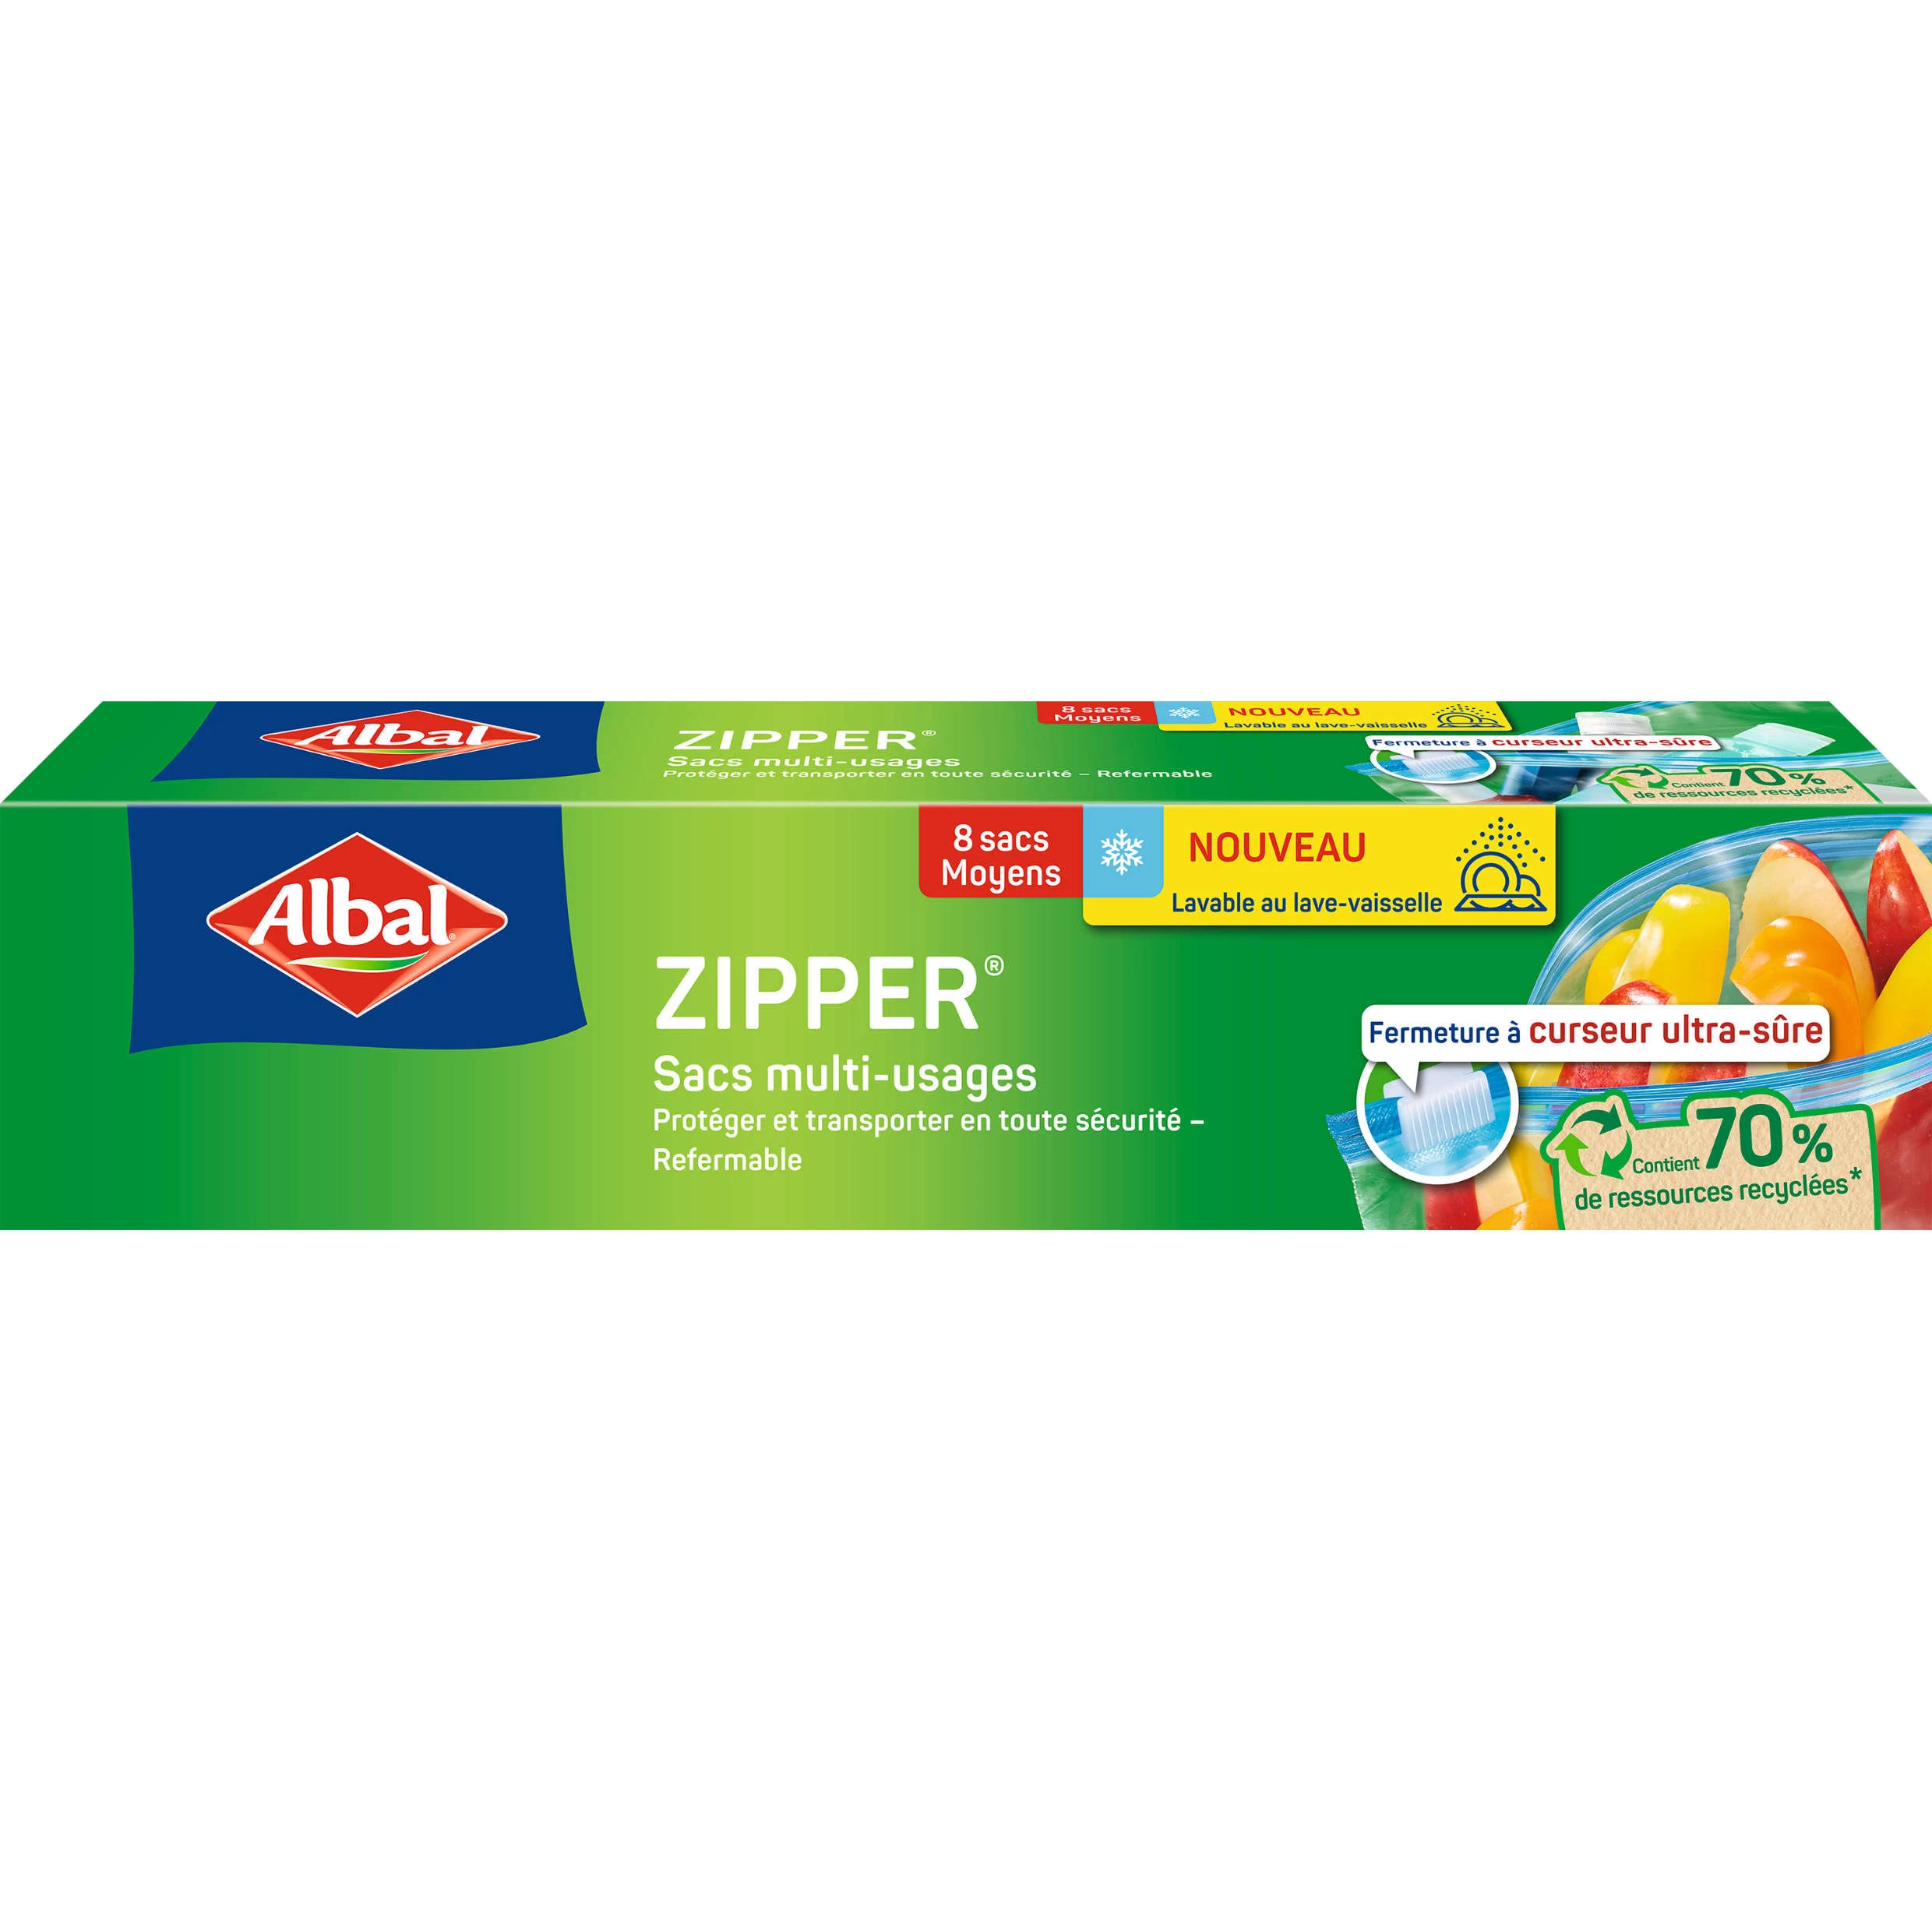 Zipper freezer bags; average size: 27 x 24 cm - ALBAL